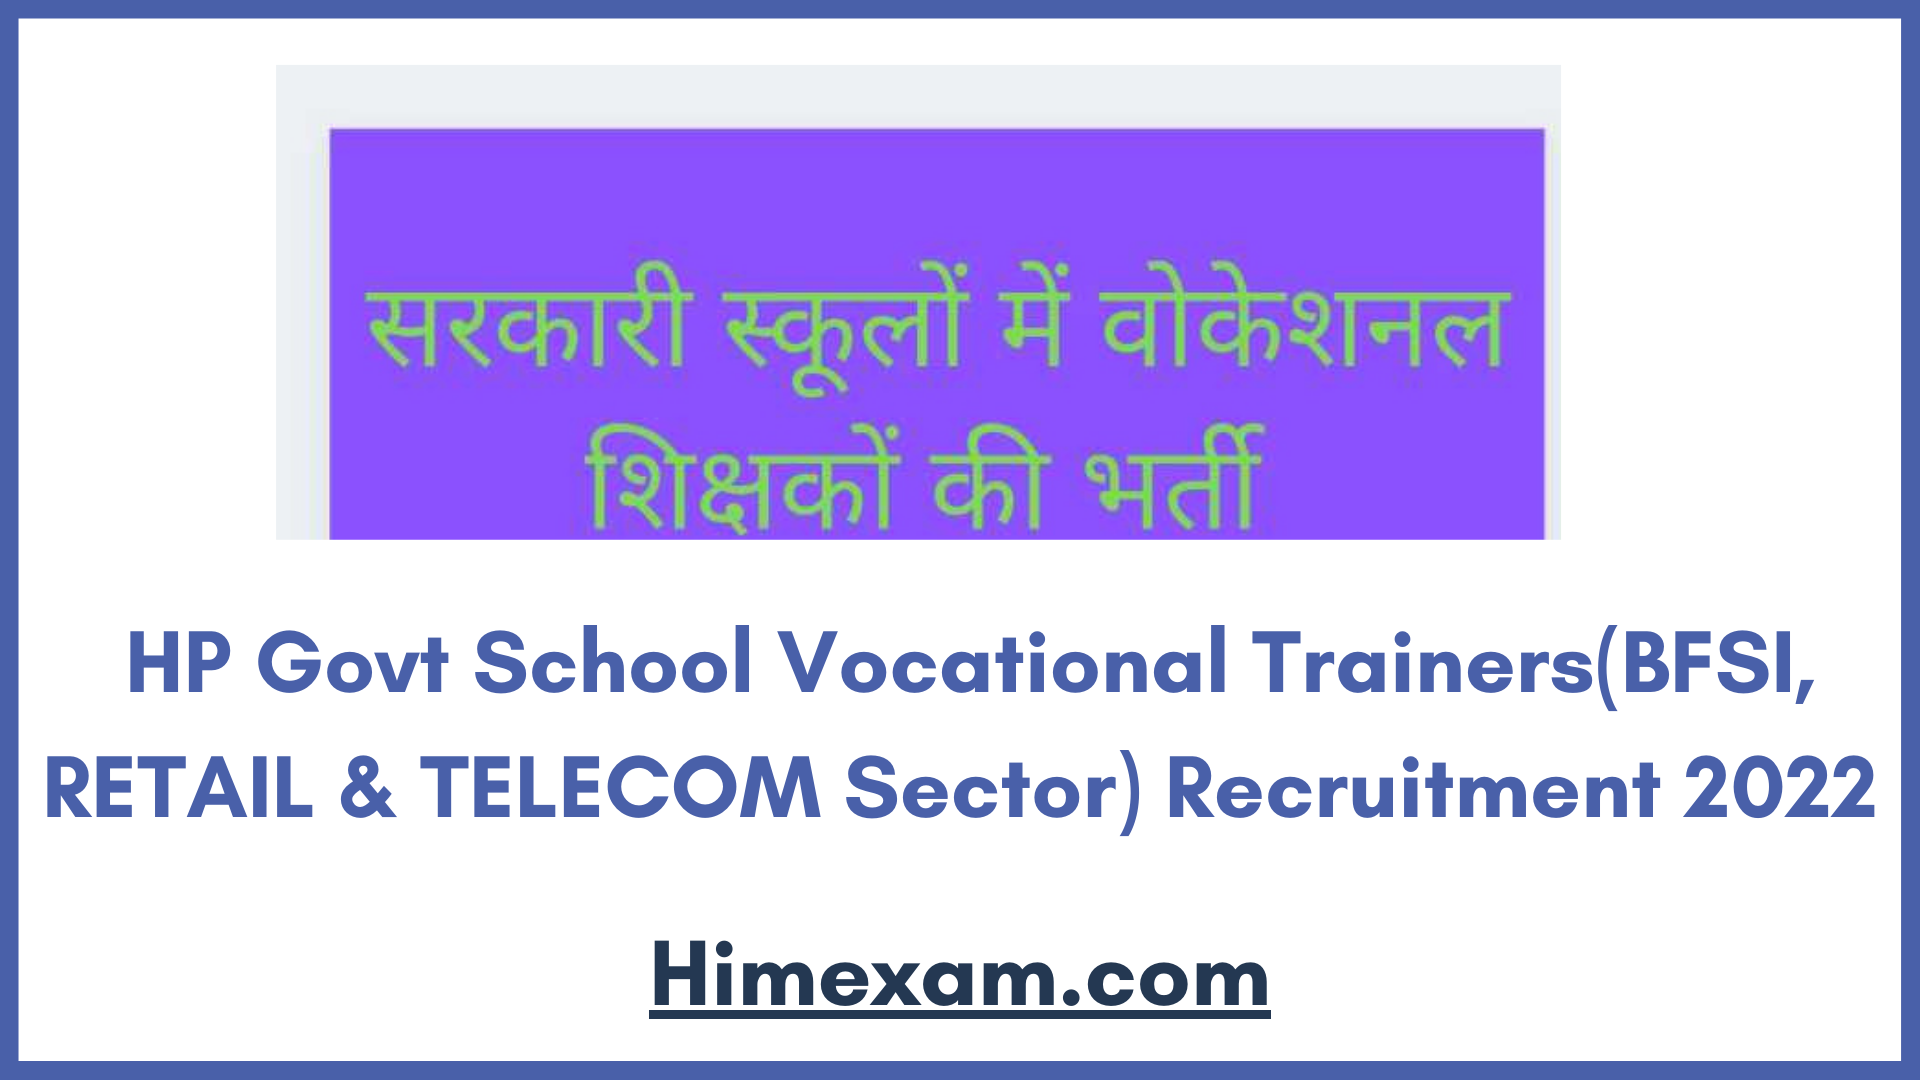 HP Govt School Vocational Trainers(BFSI, RETAIL & TELECOM Sector) Recruitment 2022